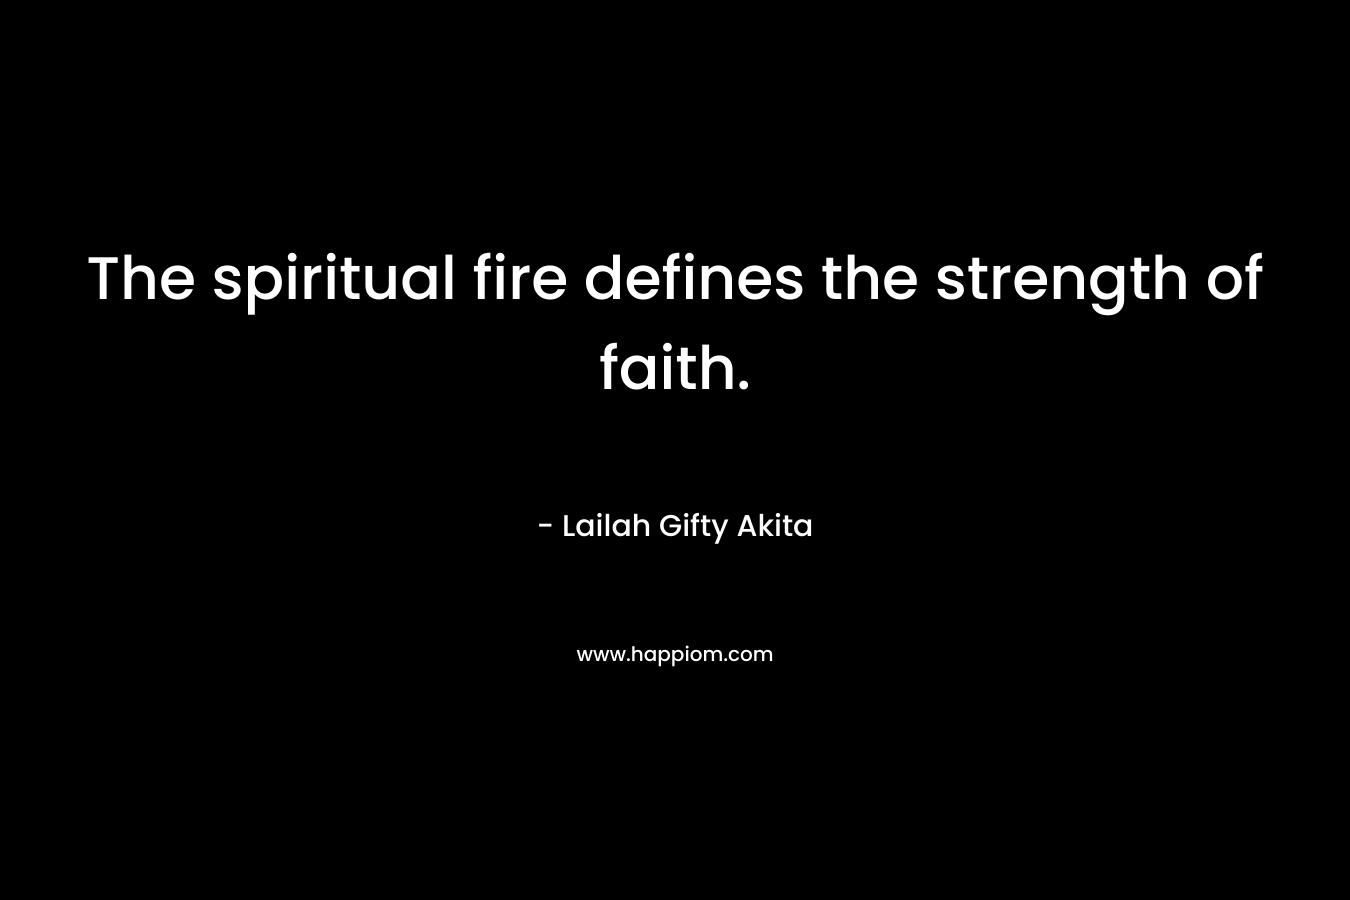 The spiritual fire defines the strength of faith.